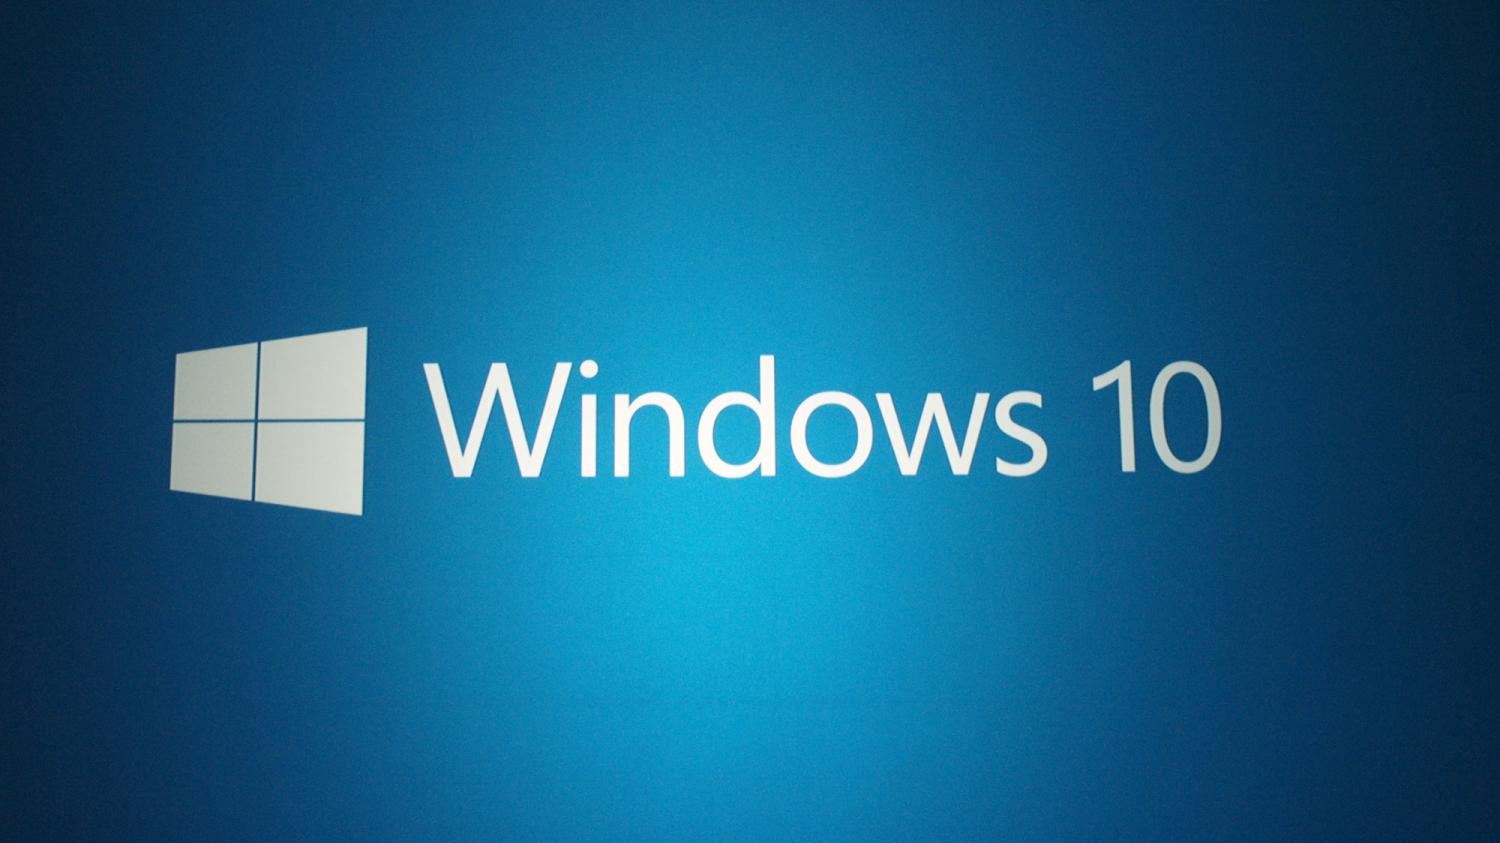 How to automatically run programs on Windows 10